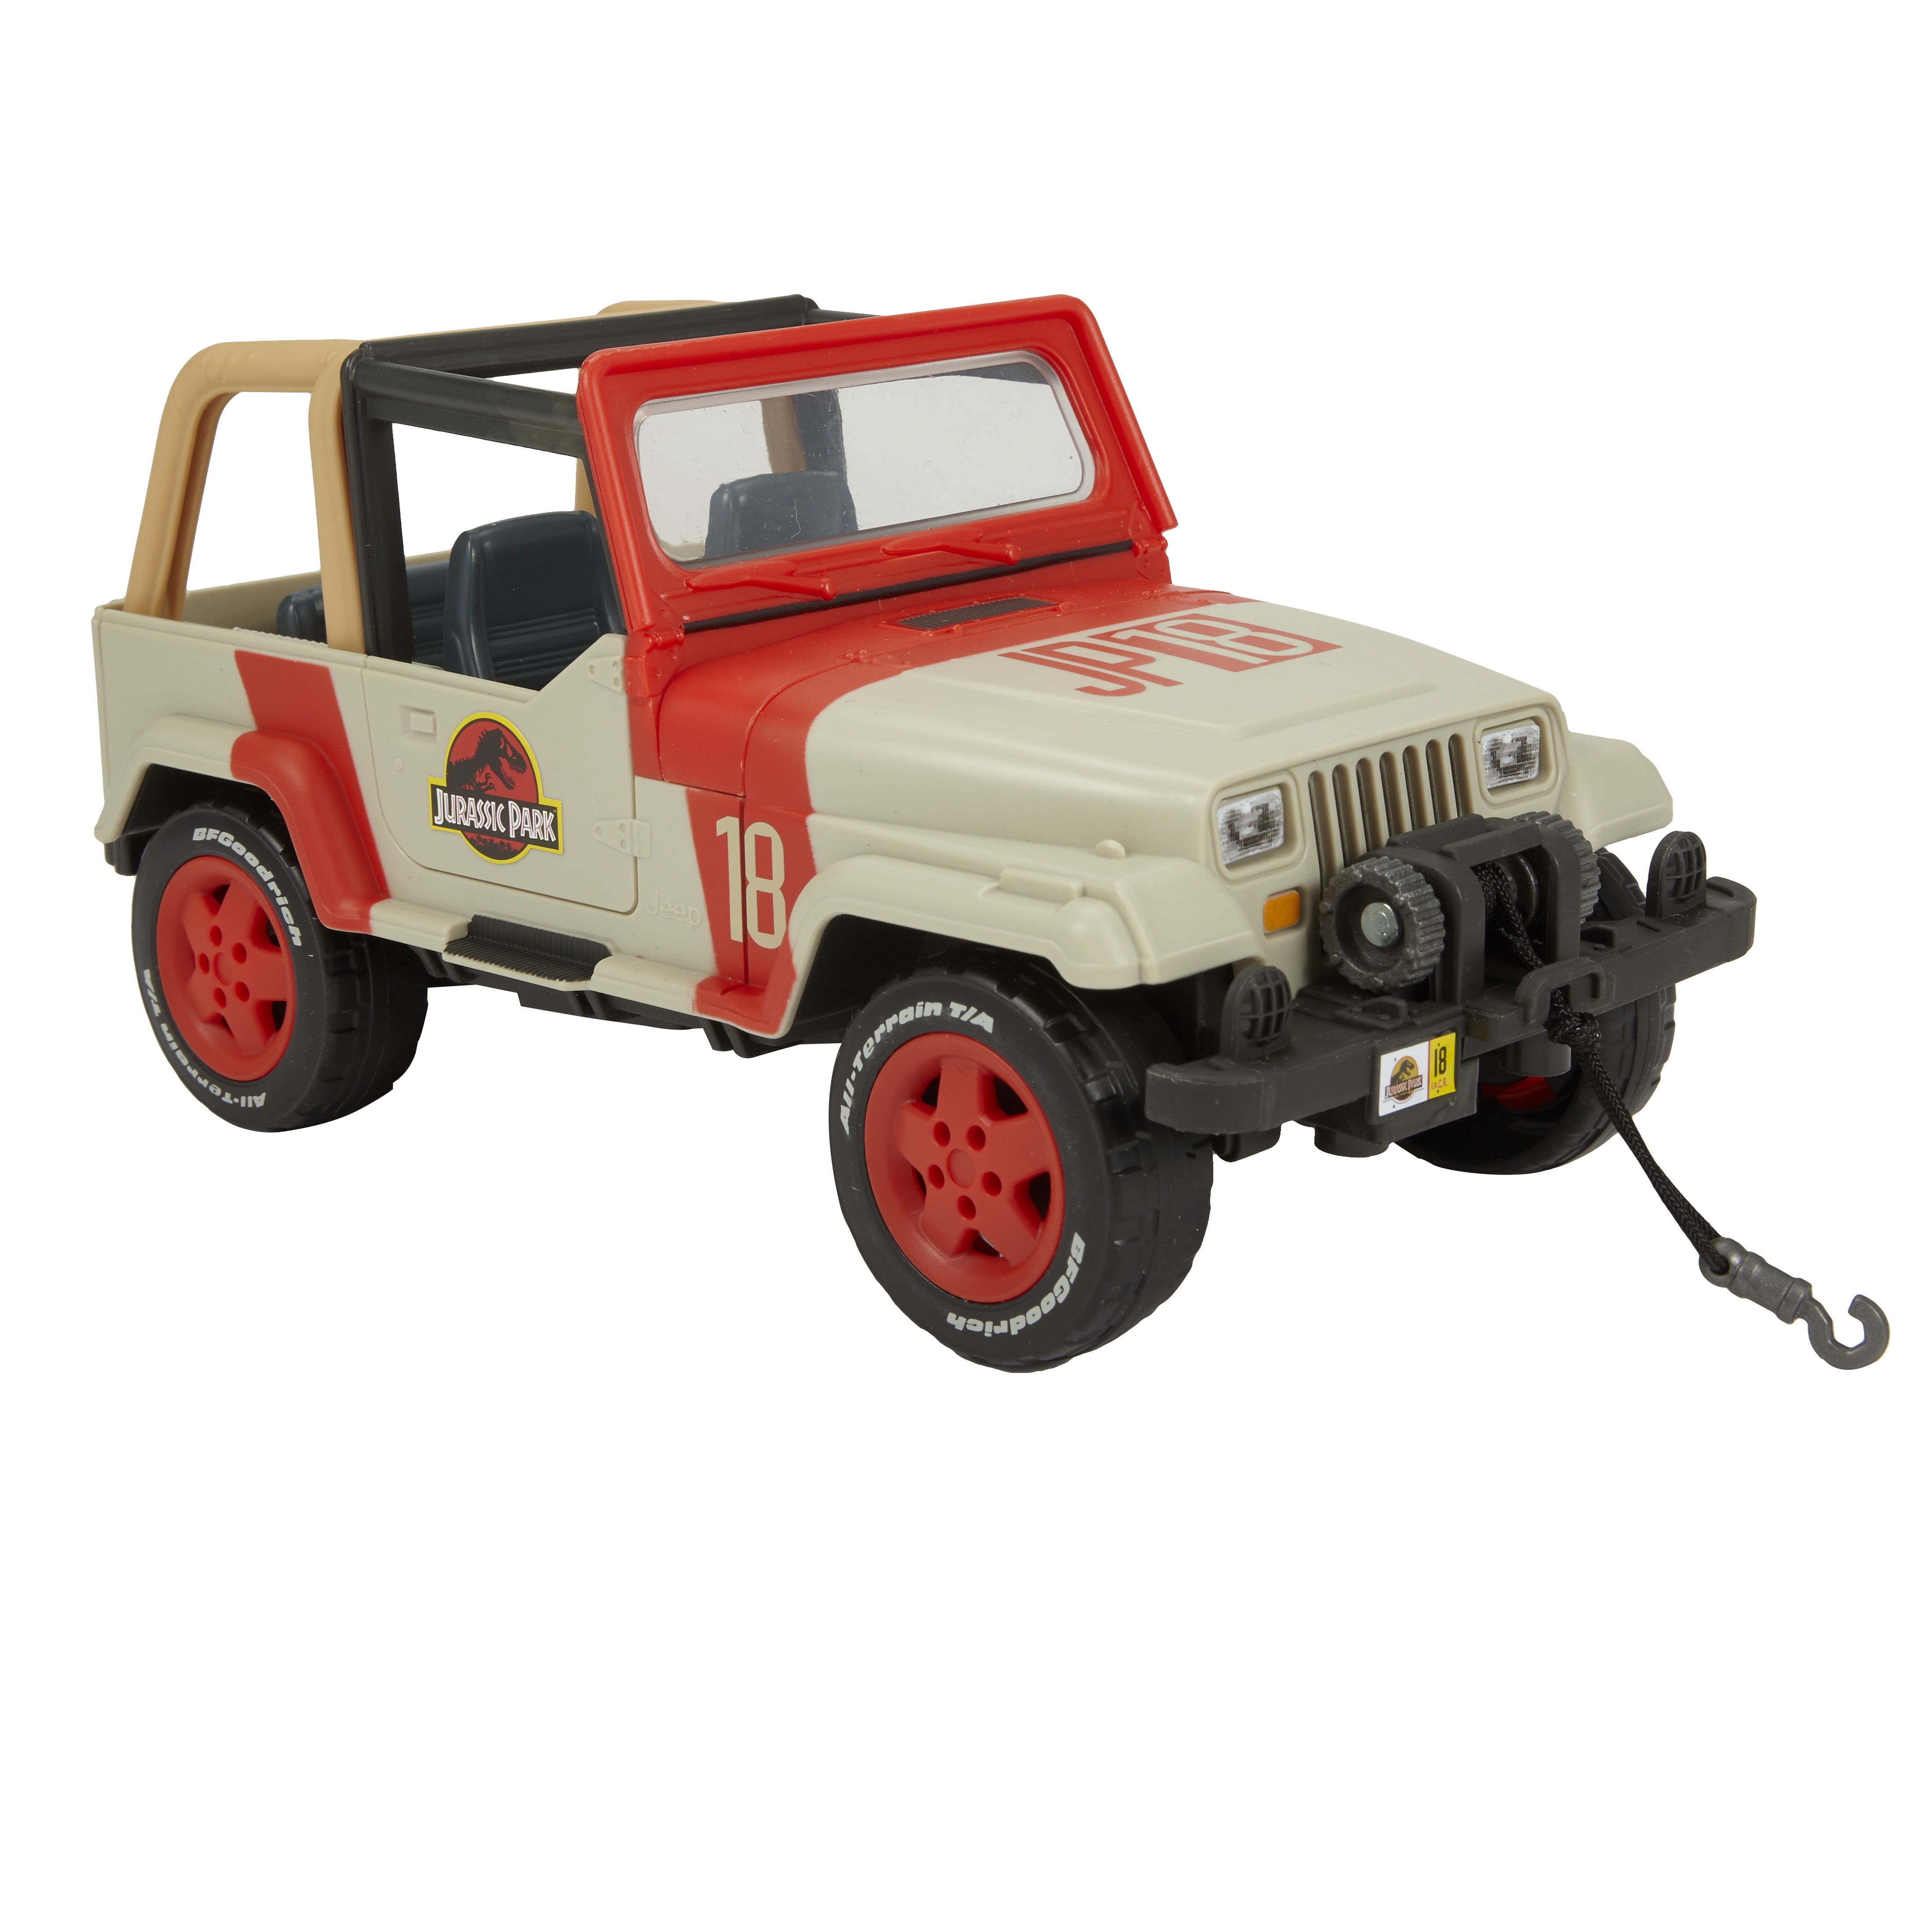 Matchbox Jurassic World Jeep Wranger with Winch